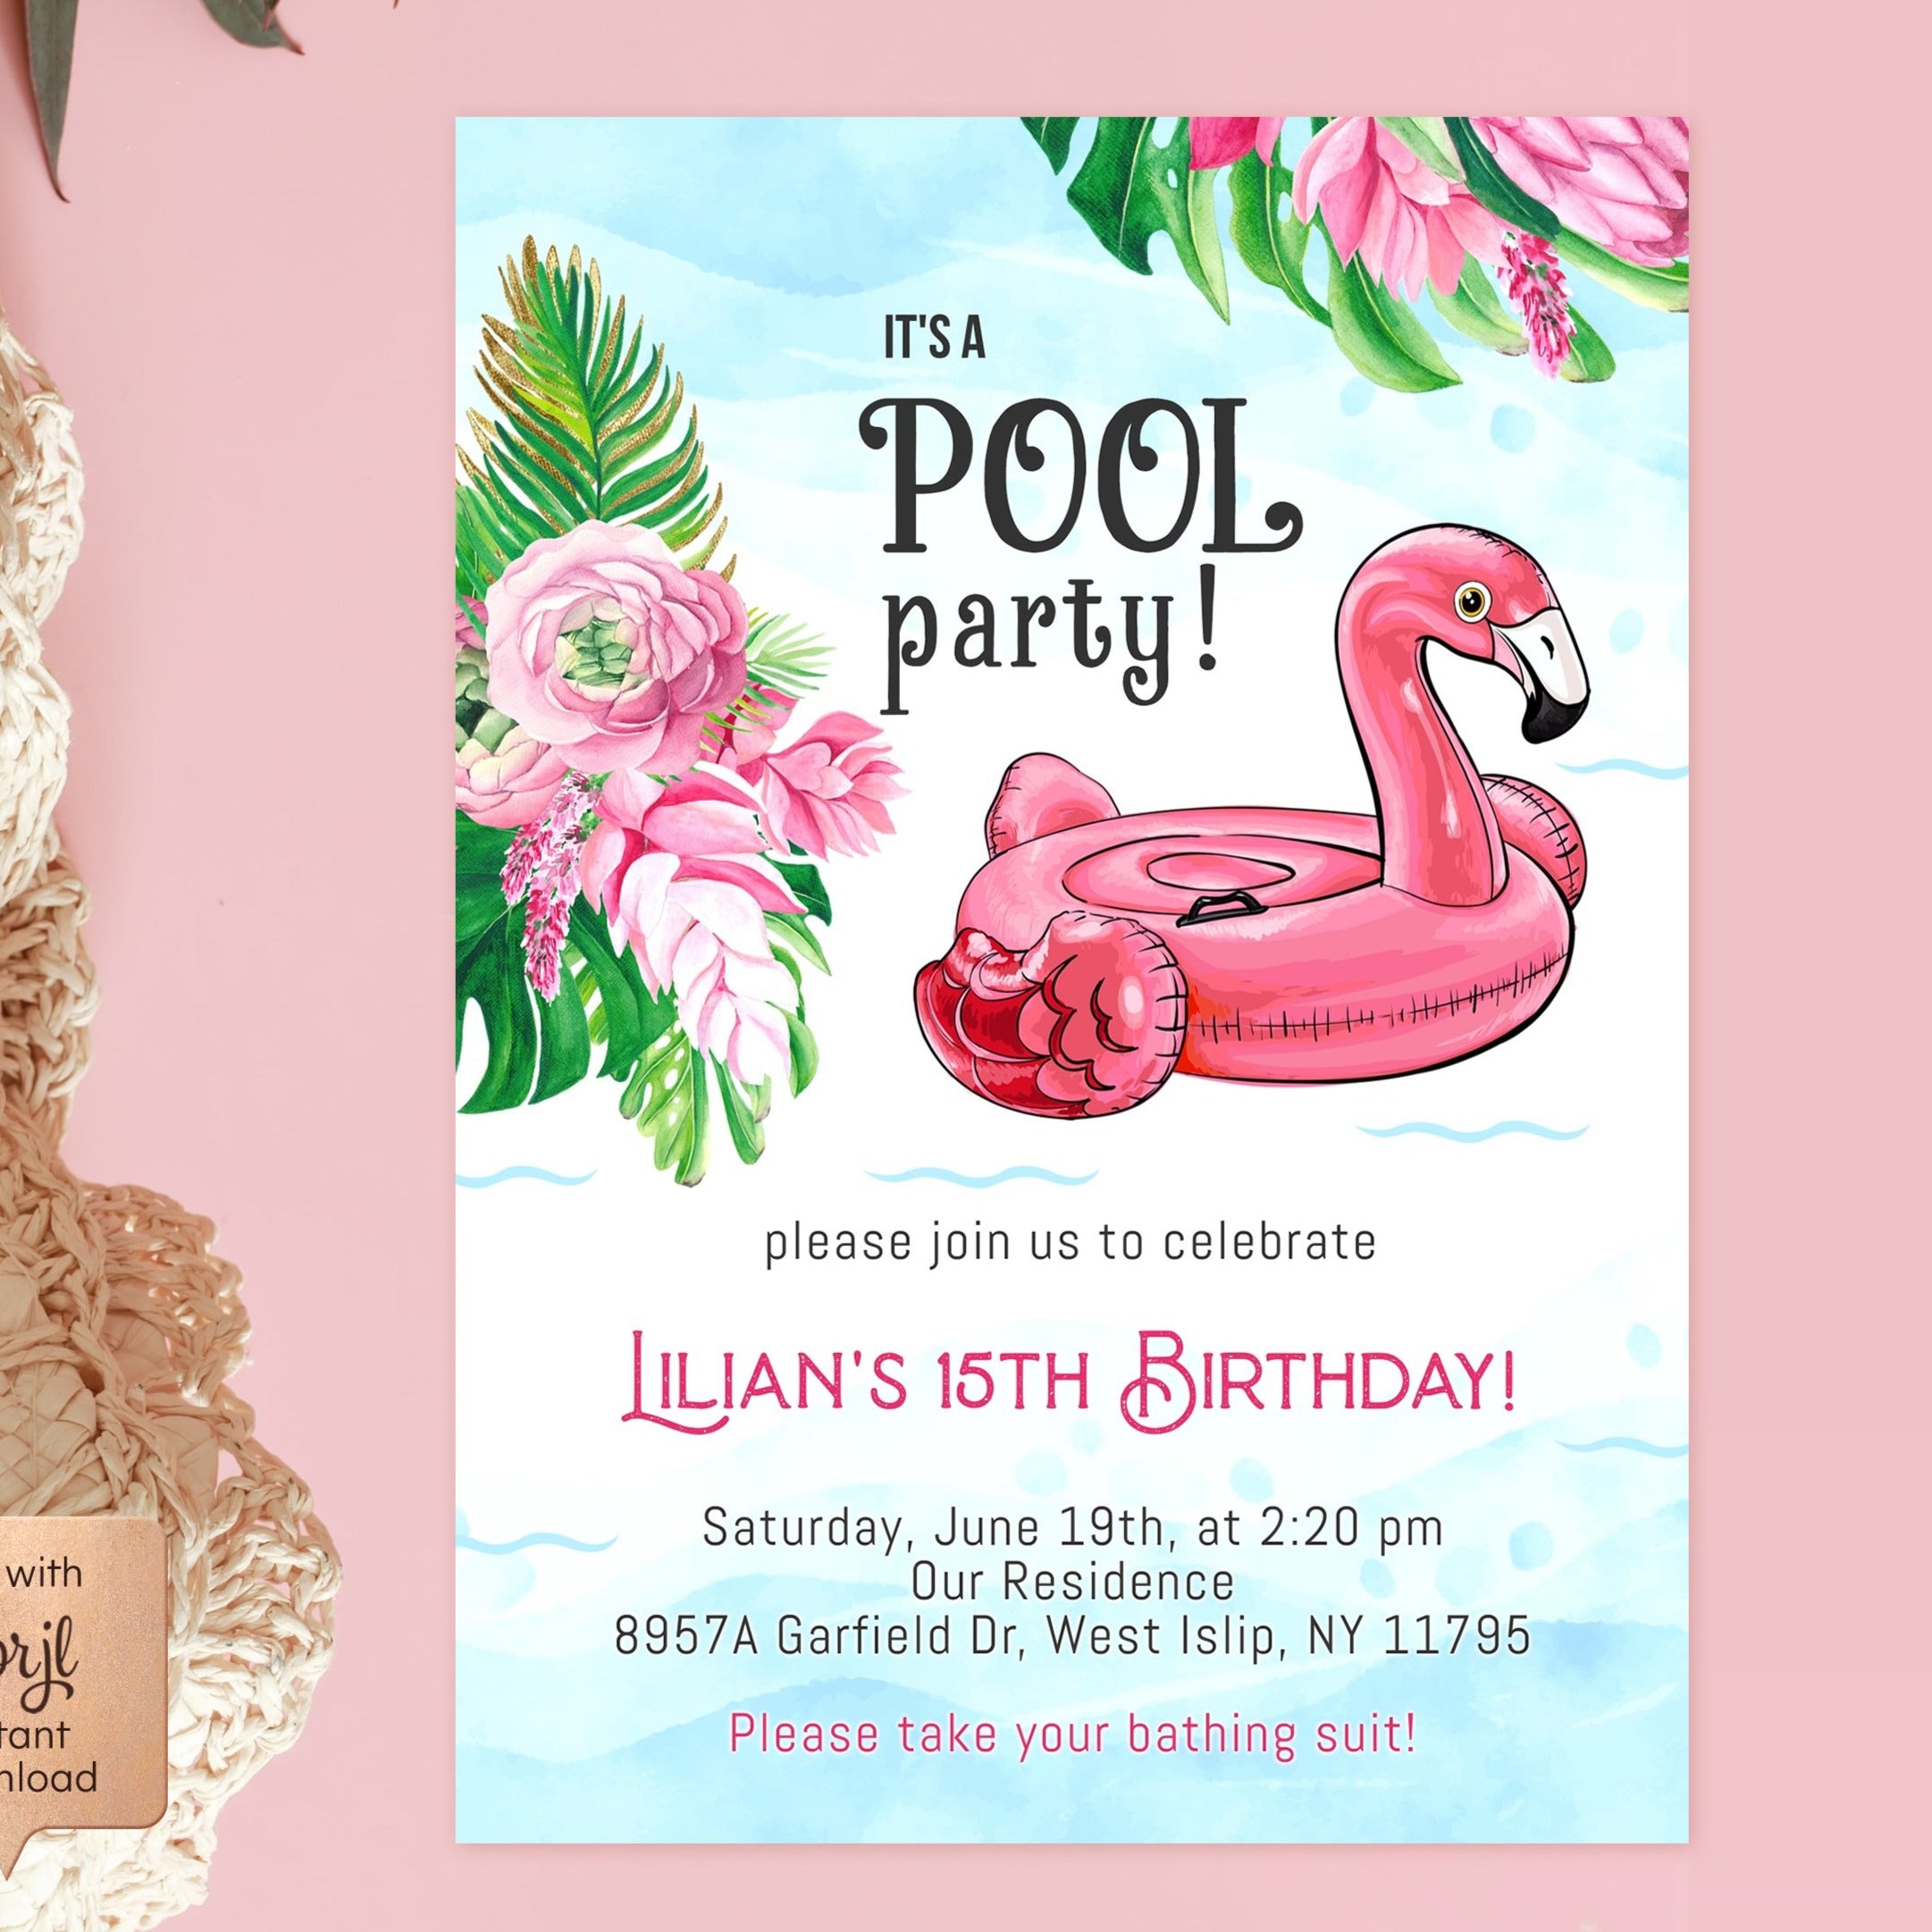 girls-pool-party-invitation-template-flamingle-invitation-bacheloret-partyrainbow